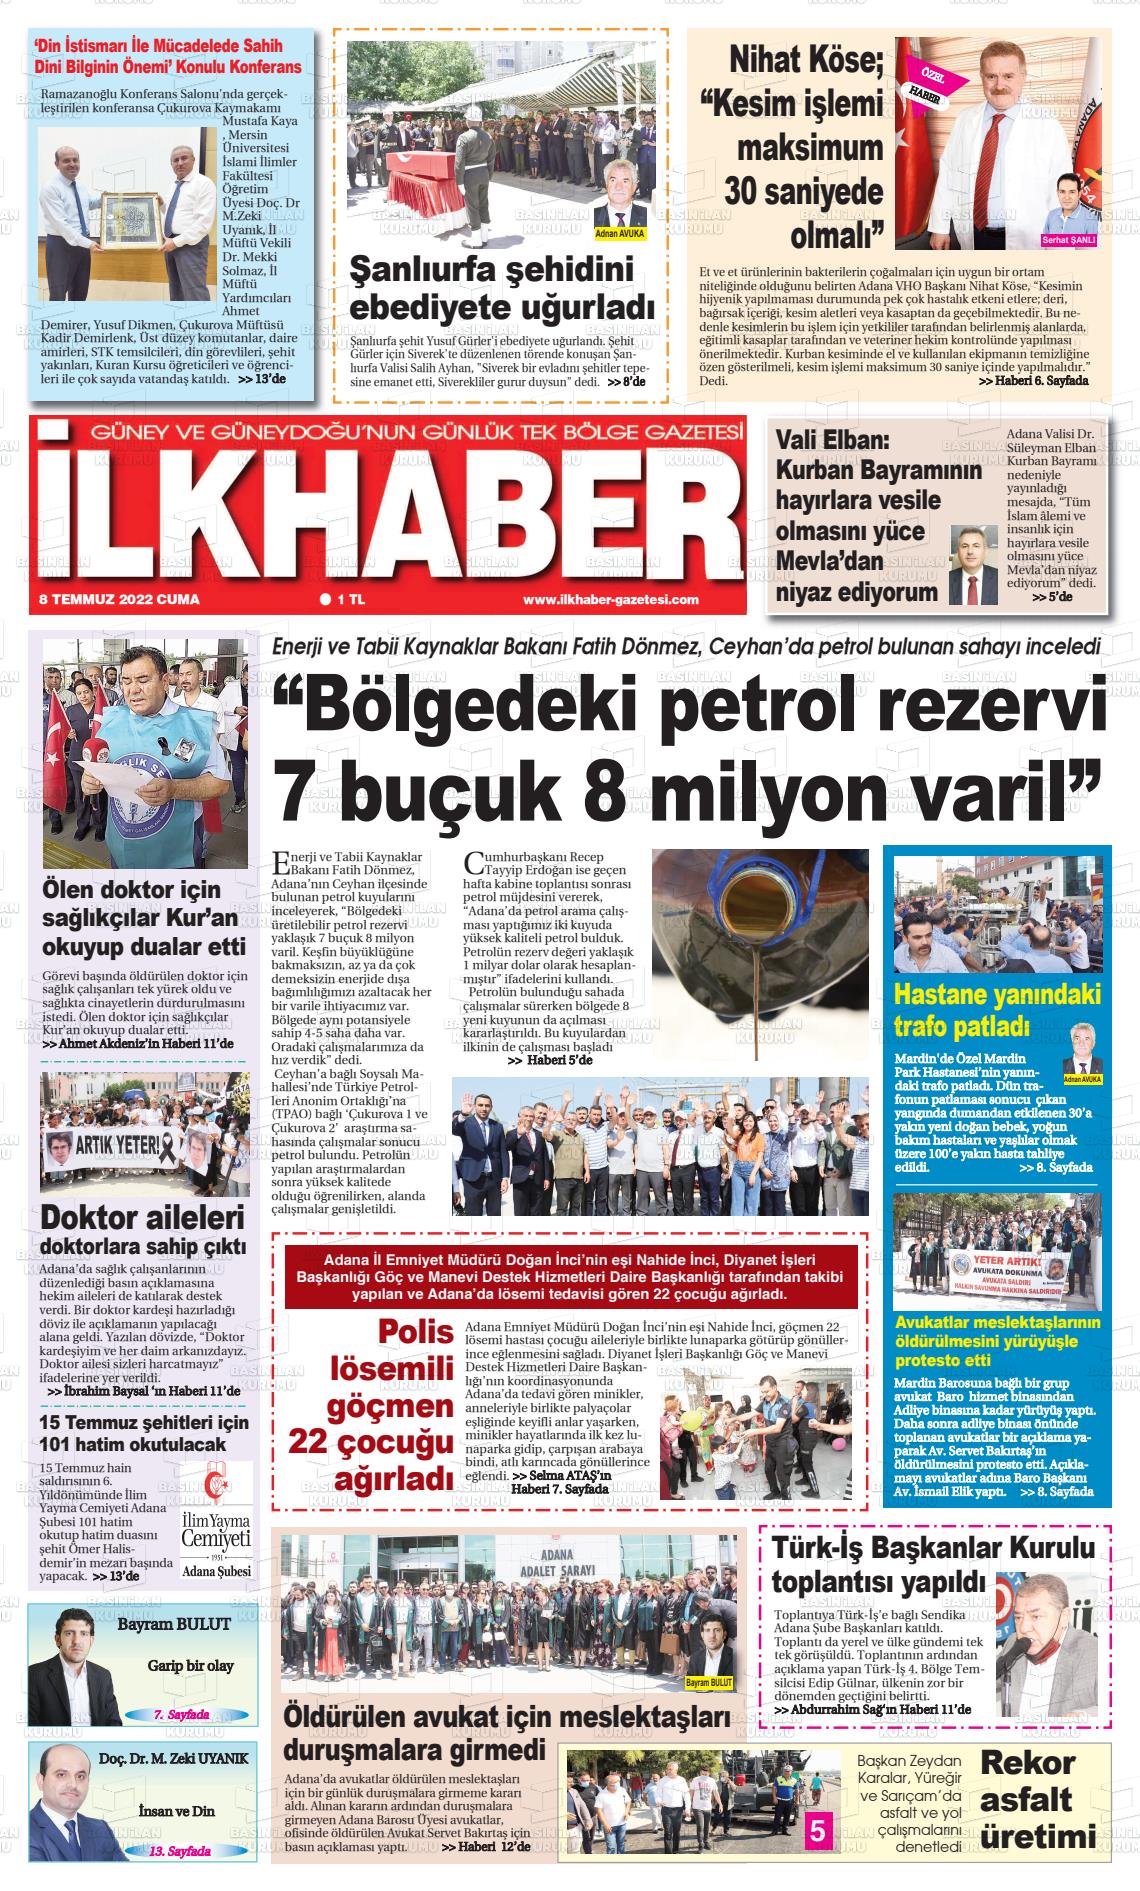 08 Temmuz 2022 İlk Haber Gazete Manşeti